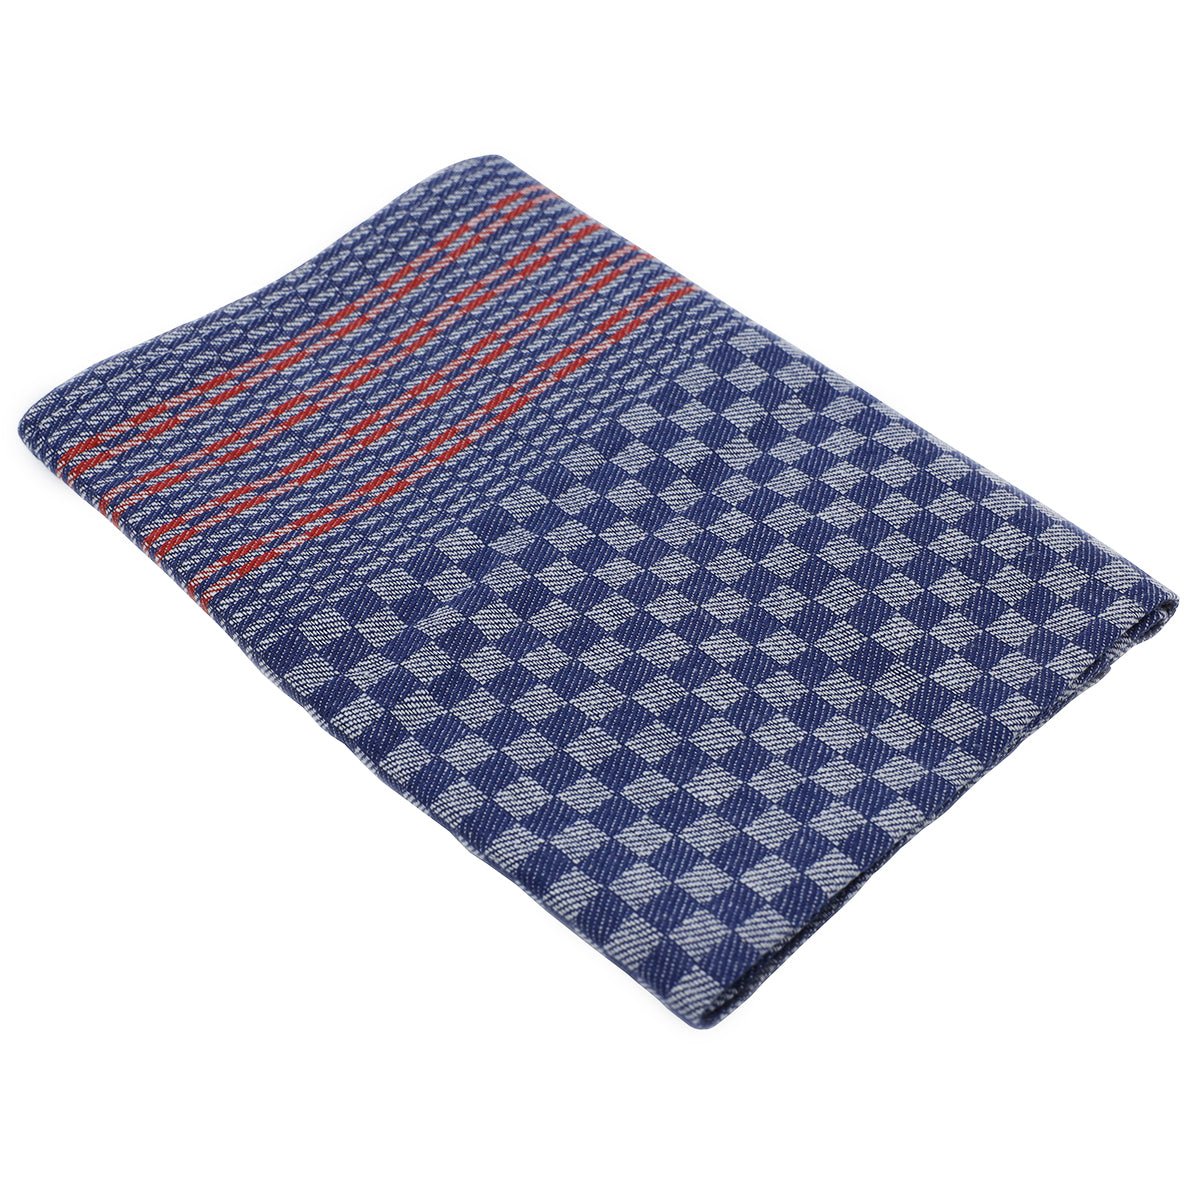 (10 stk) Håndkle i halvlin - 50 x 100 cm - blårutete med røde striper